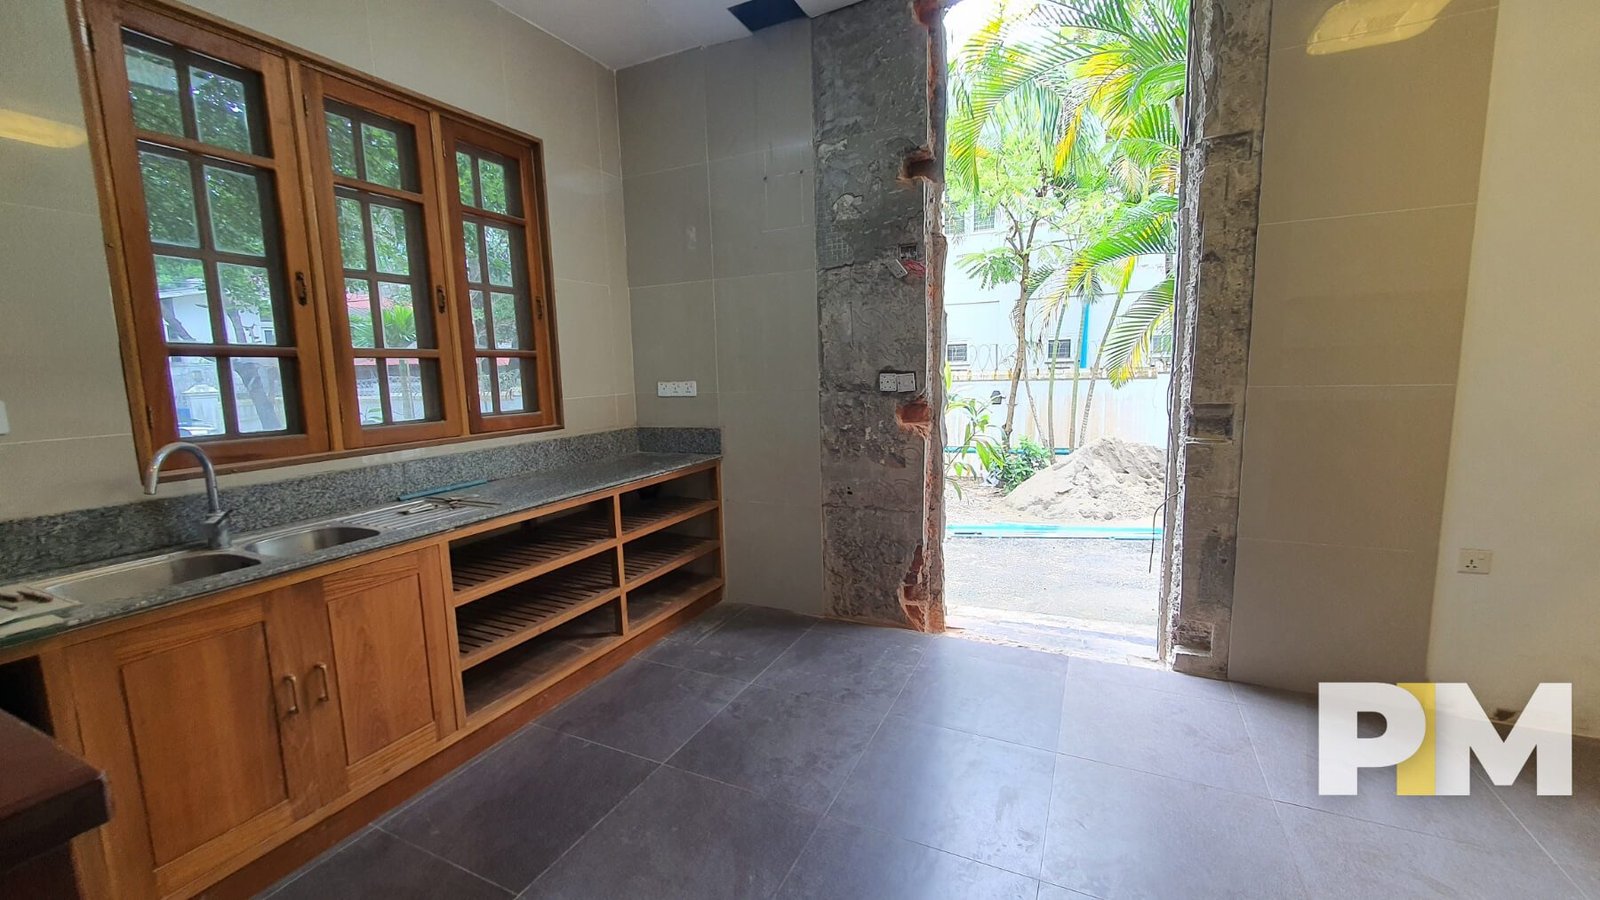 Kitchen room view - Yangon Real Estate